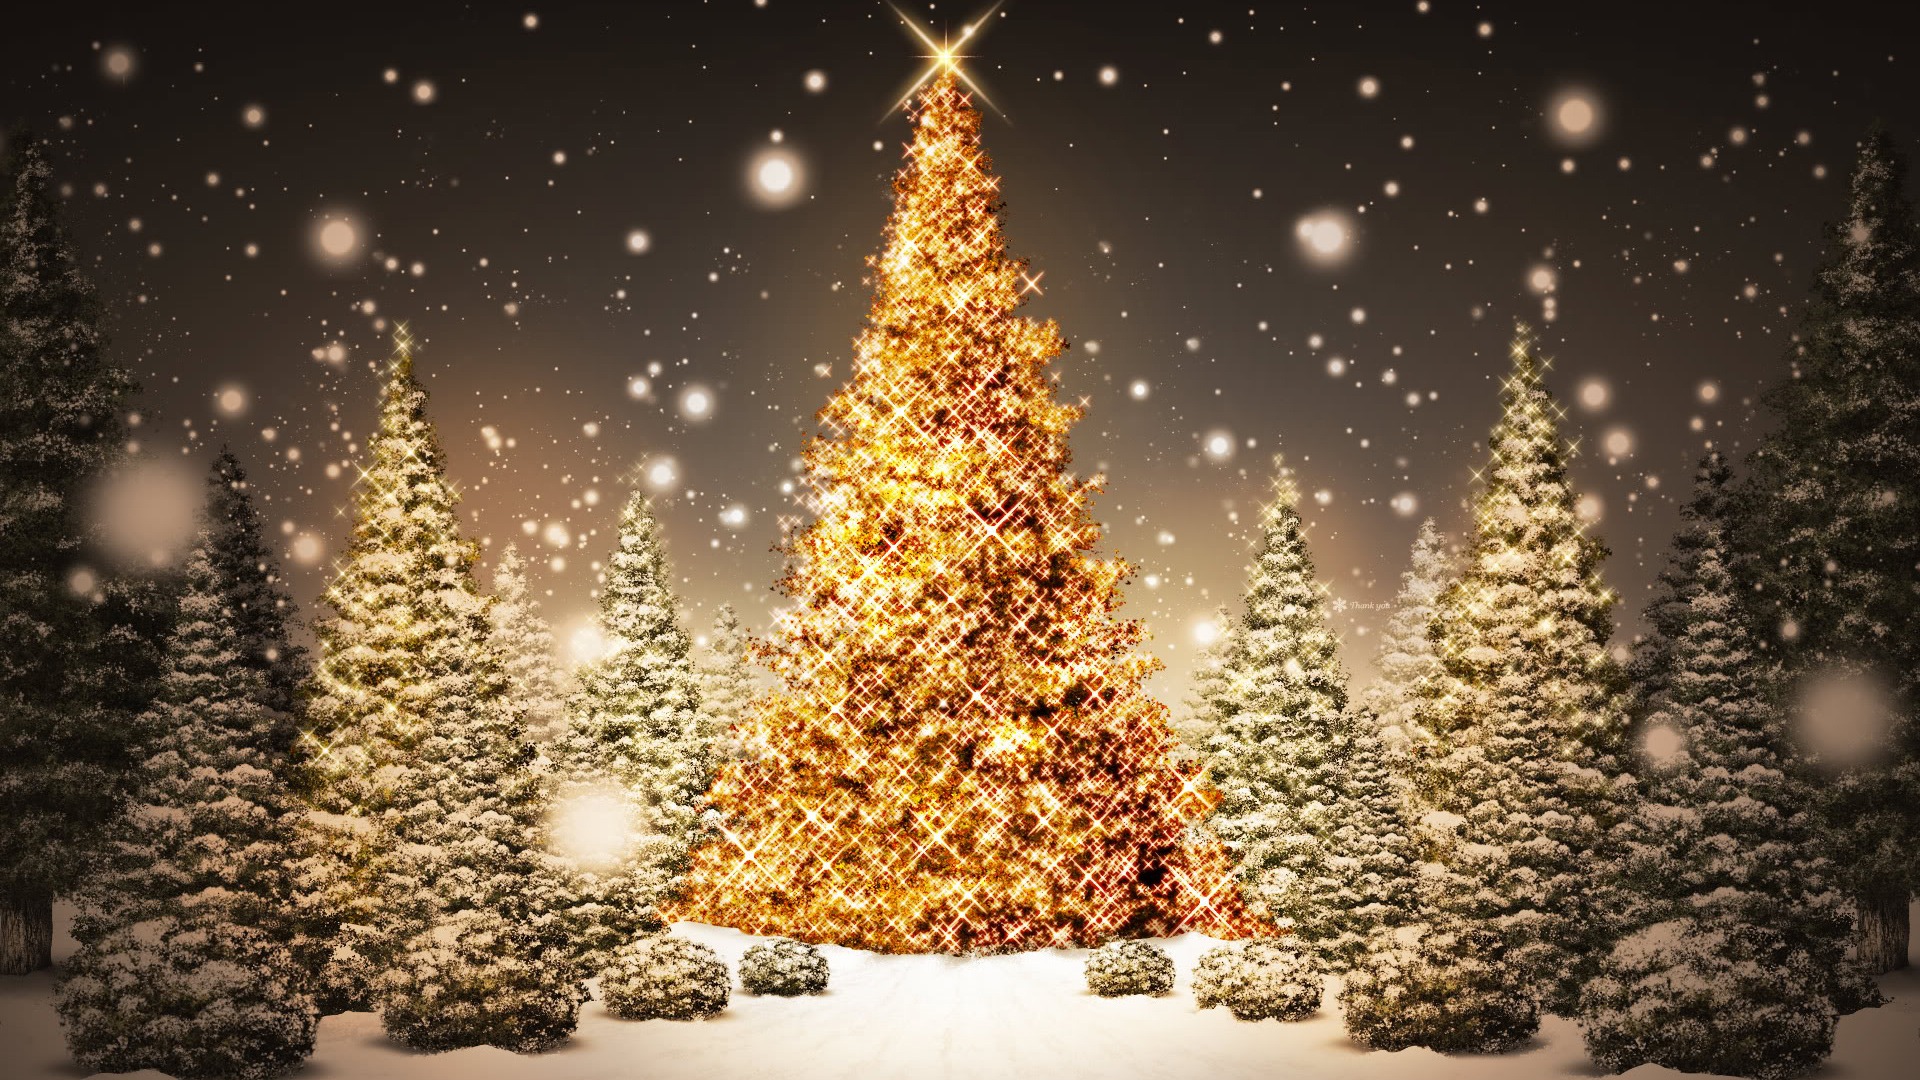 Glowing Christmas Trees HD Wallpaper FullHDwpp Full